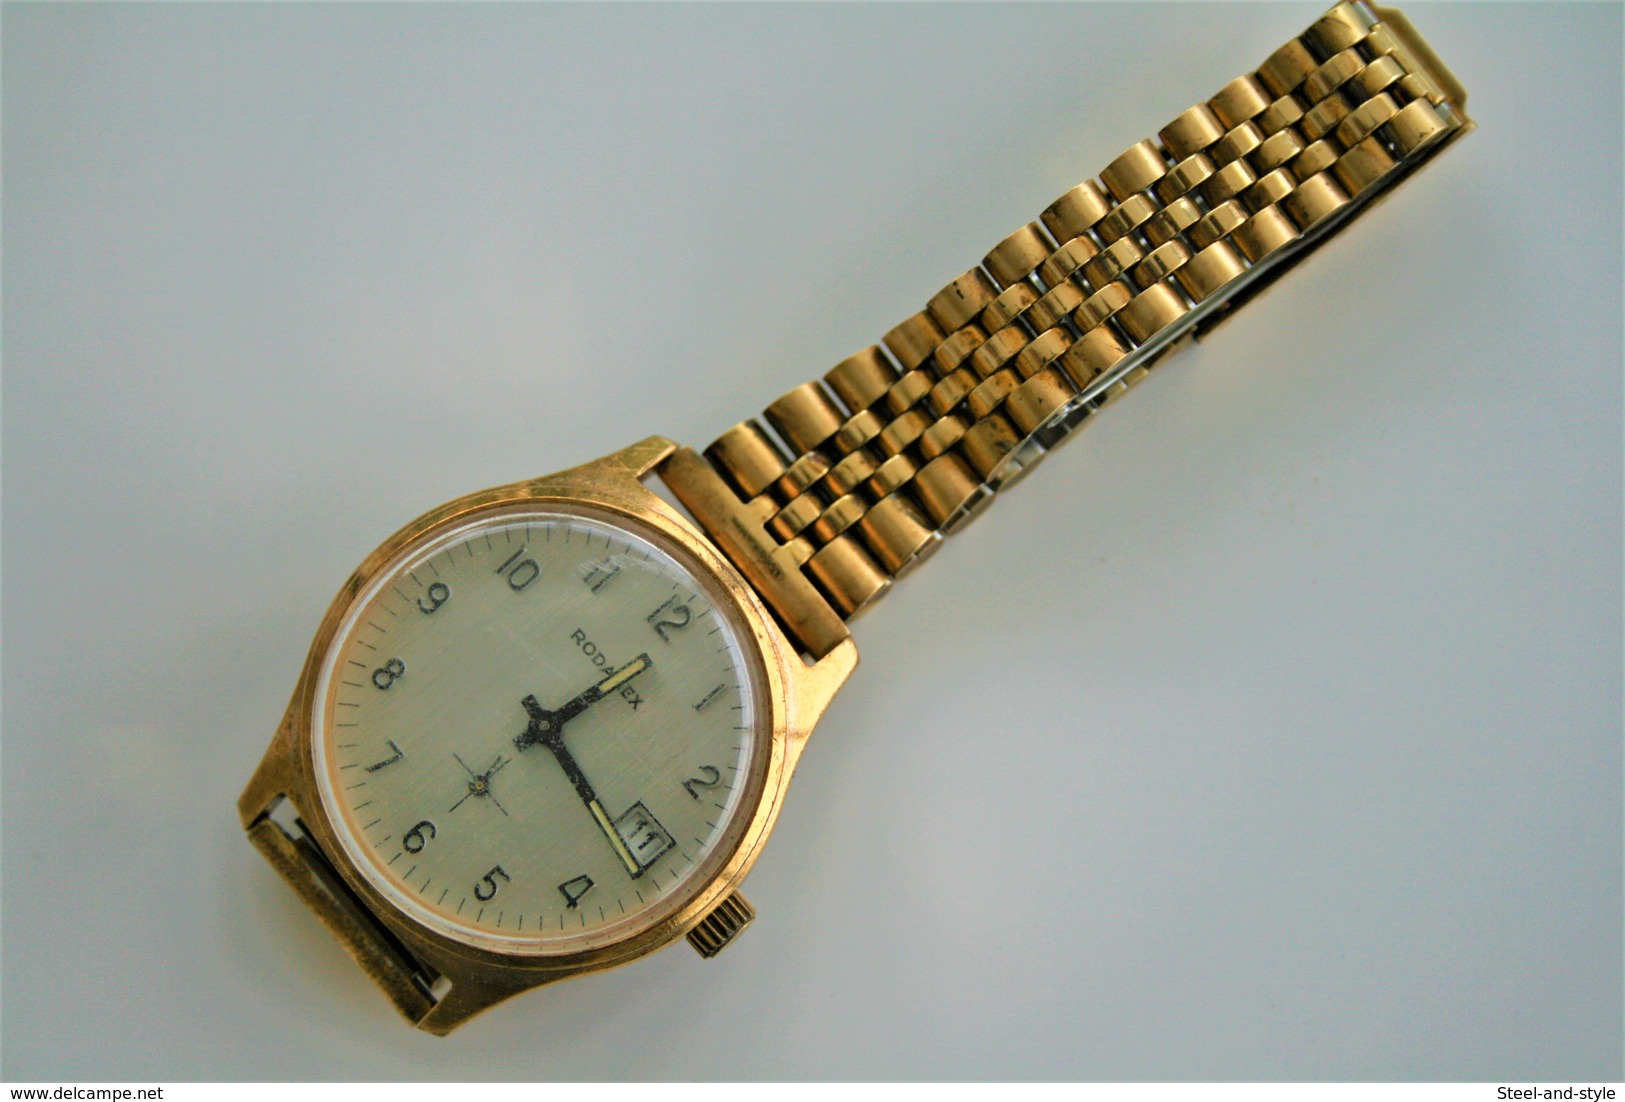 Oskar Emil diamond and sapphire Rodez chronograph - men's watch - 2015 -  limited edition - Catawiki